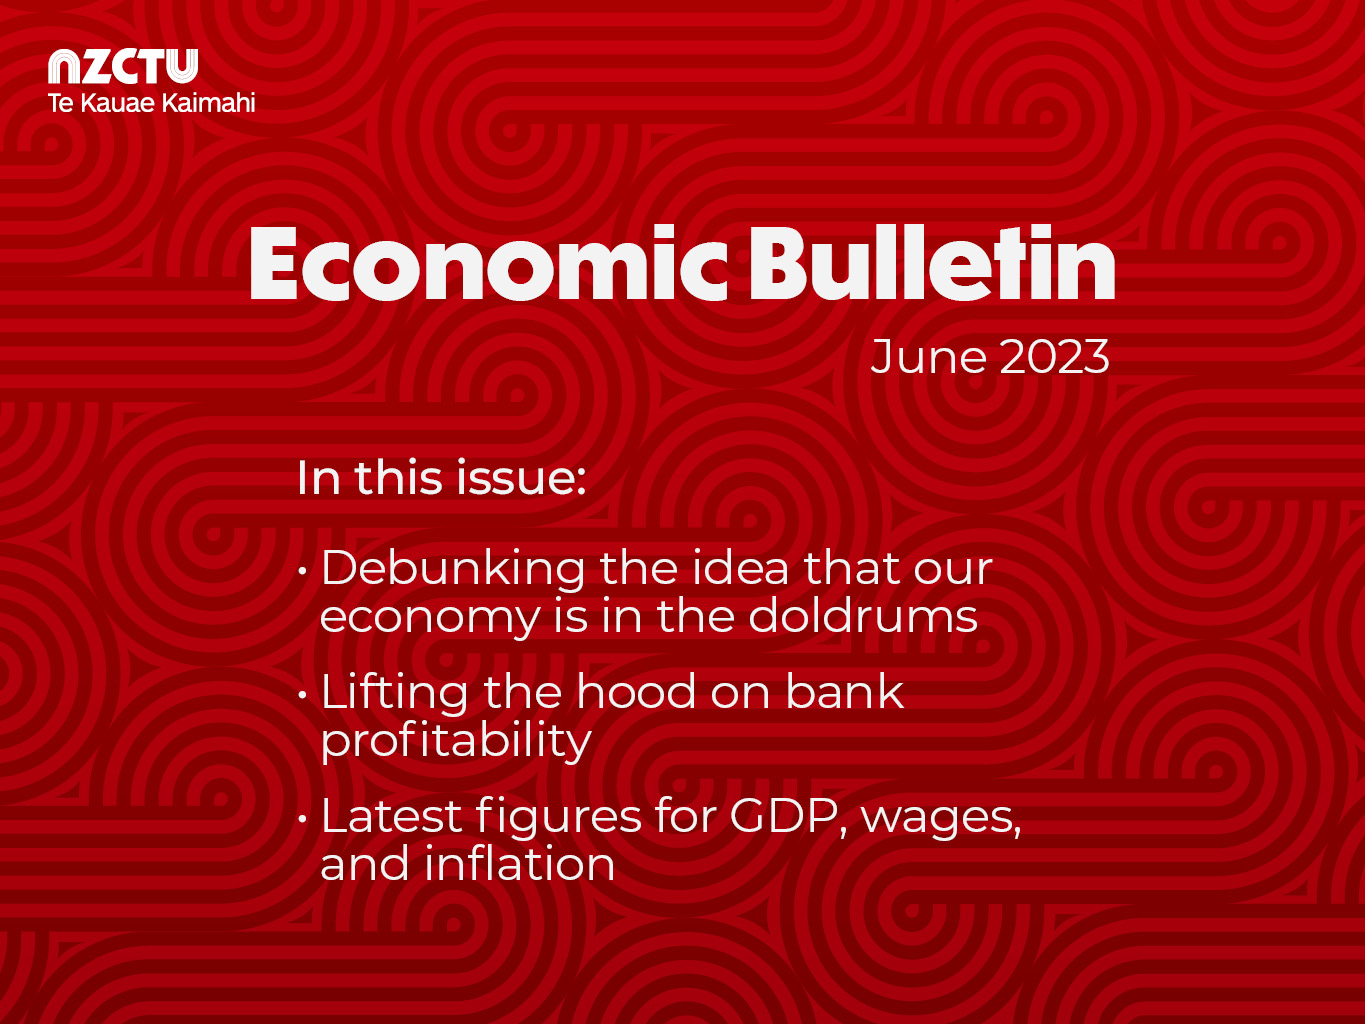 NZCTU Economic Bulletin June 2023